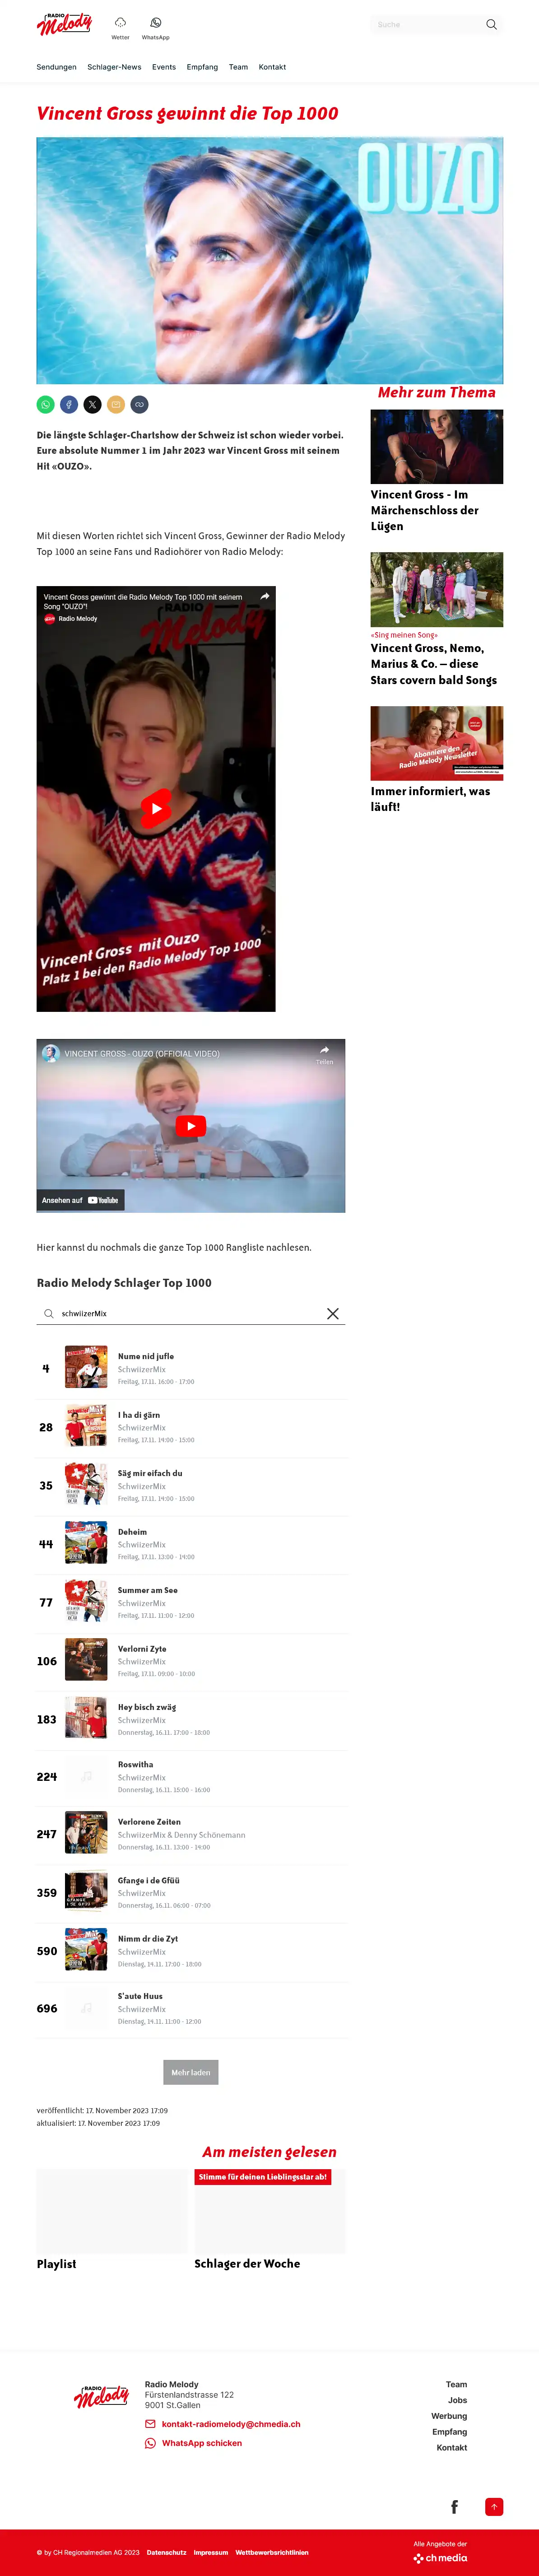 Radio Melody Schlager Top 1000 Rangliste